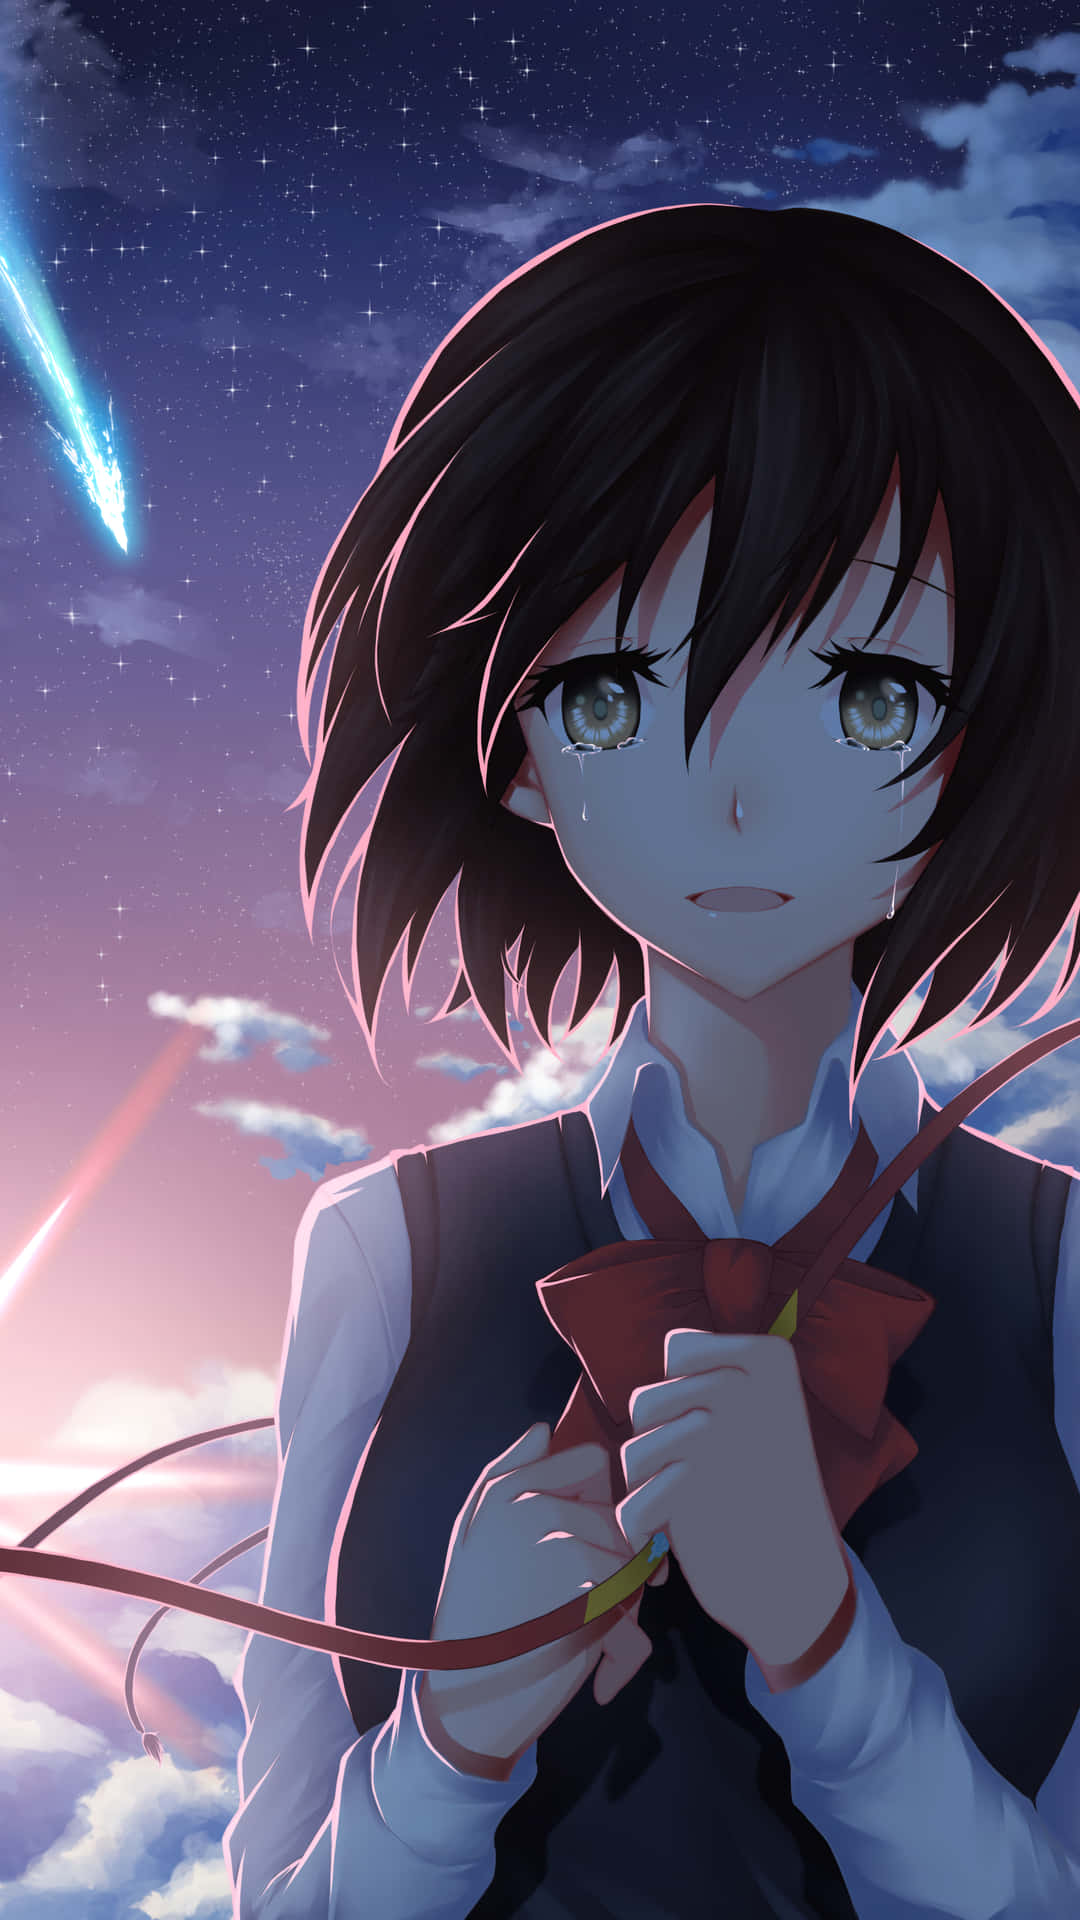 Sad Crying Anime Schoolgirl With Pink Skies Wallpaper